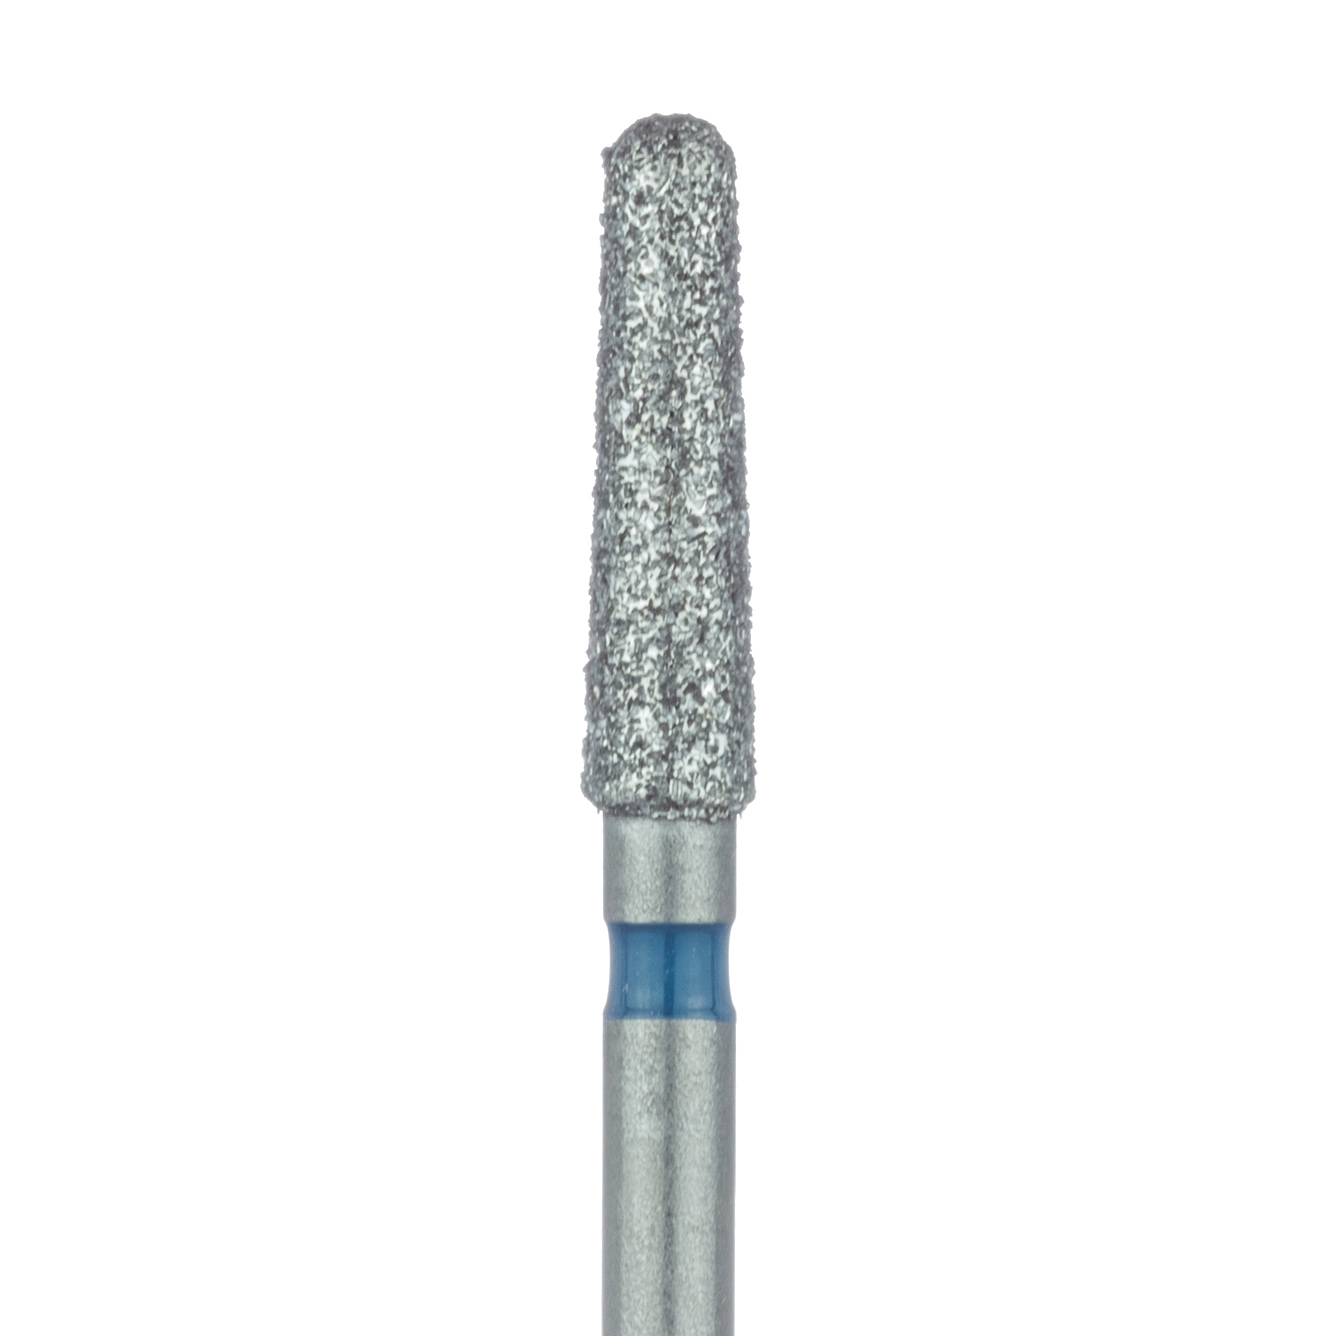 850-021-FG Round End Taper Chamfer Diamond Bur, 2.1mm Ø, Medium, FG